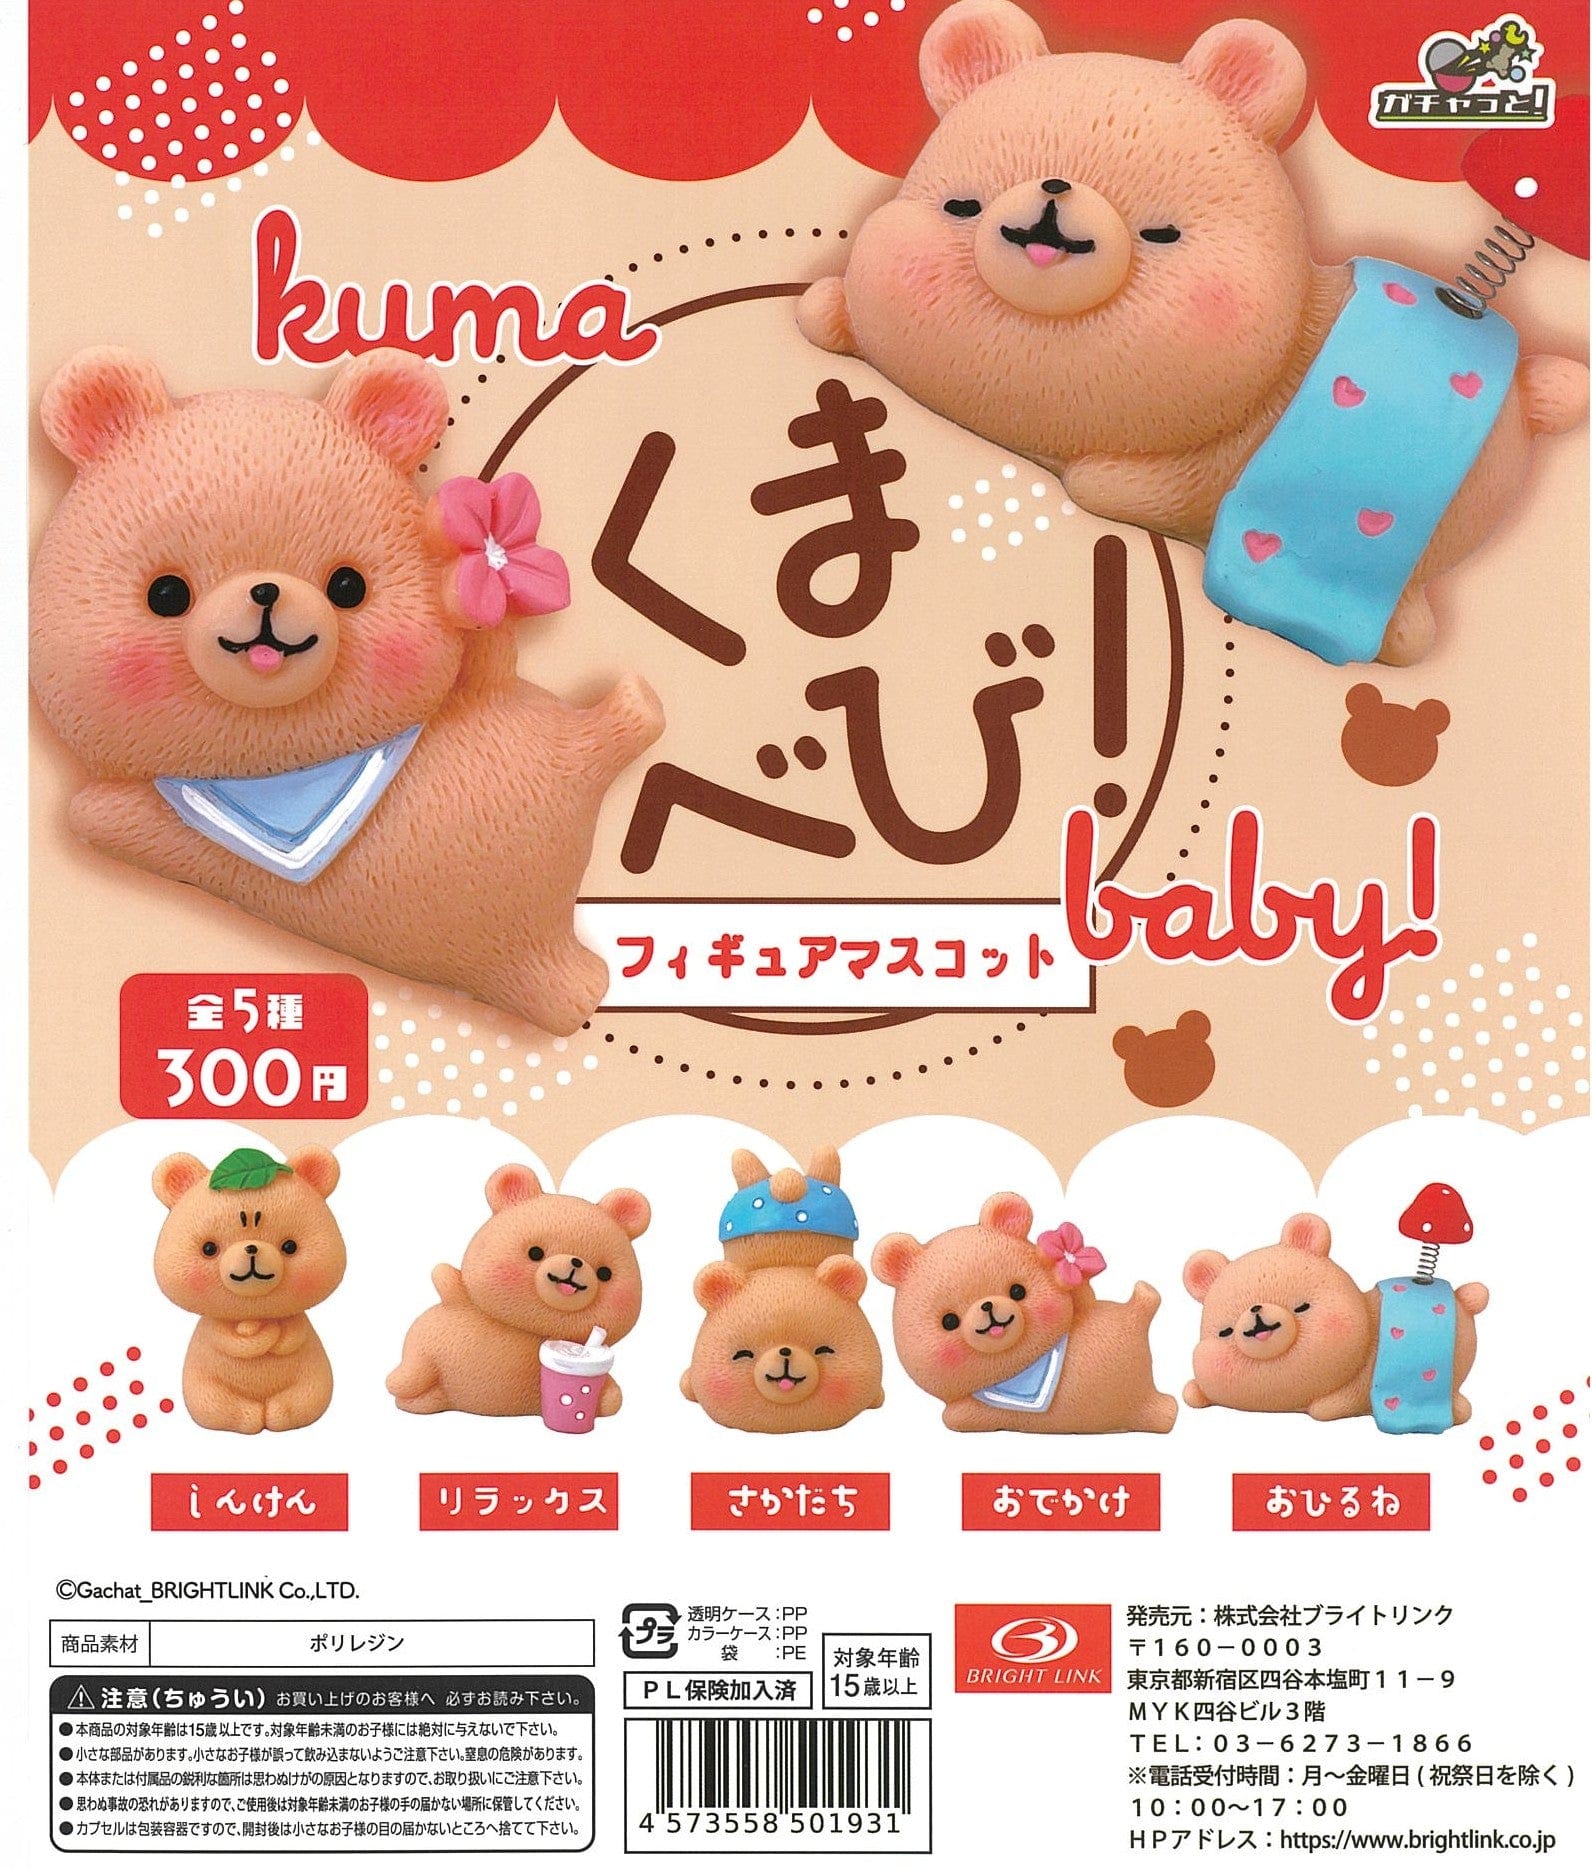 Bright Link CP2341 Kuma Baby ! Figure Mascot